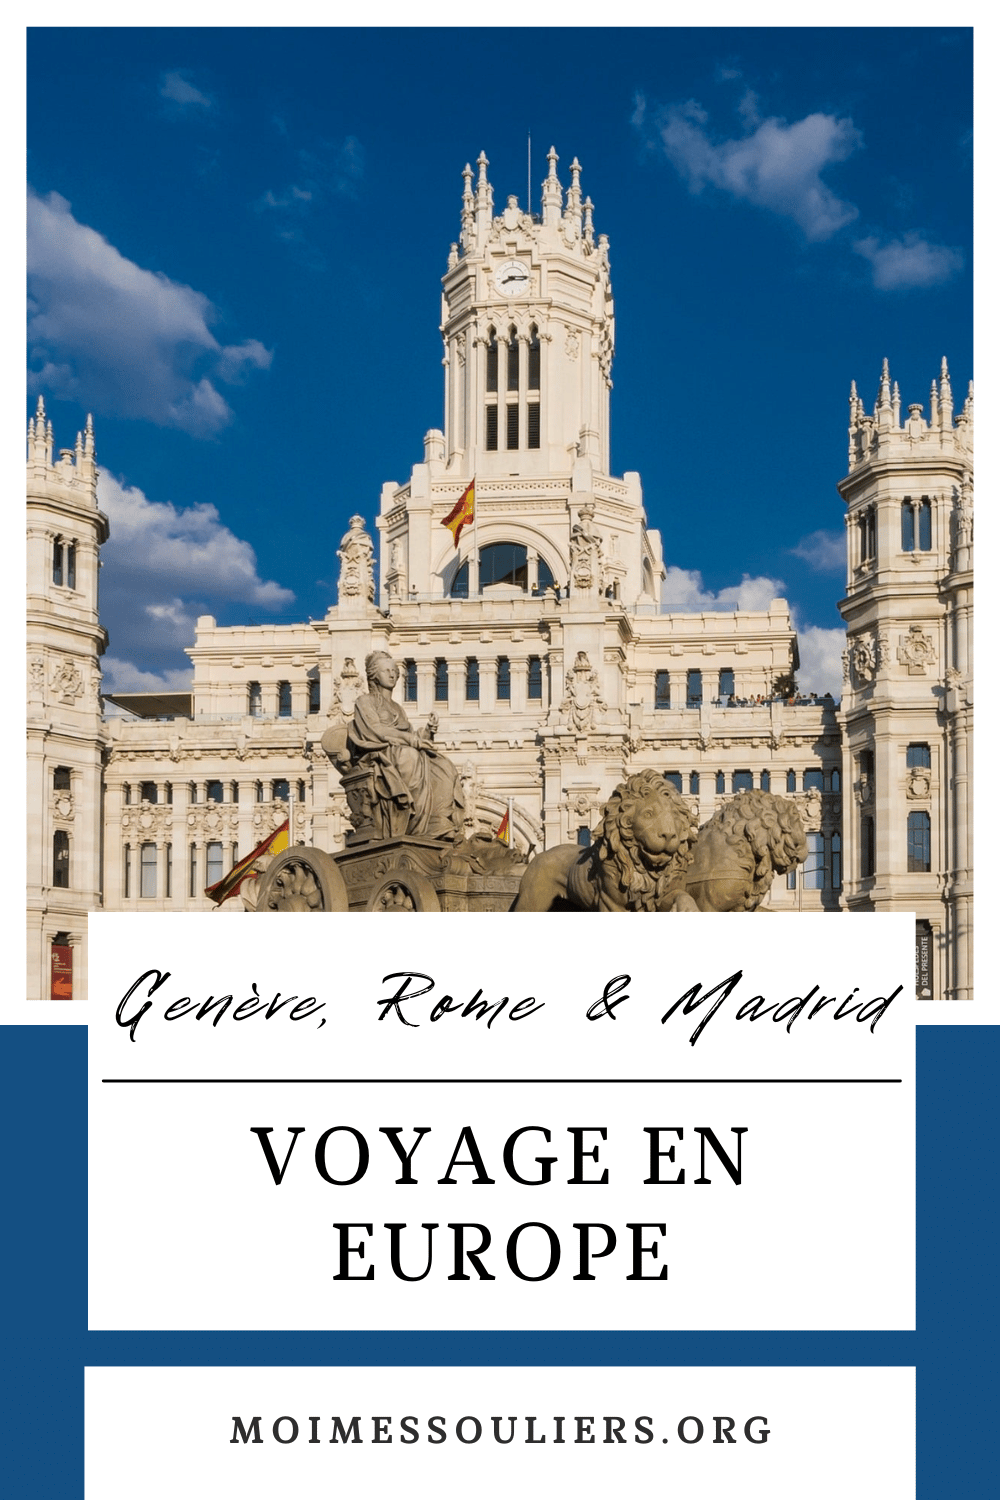 Voyage en Europe: Genève, Rome et Madrid